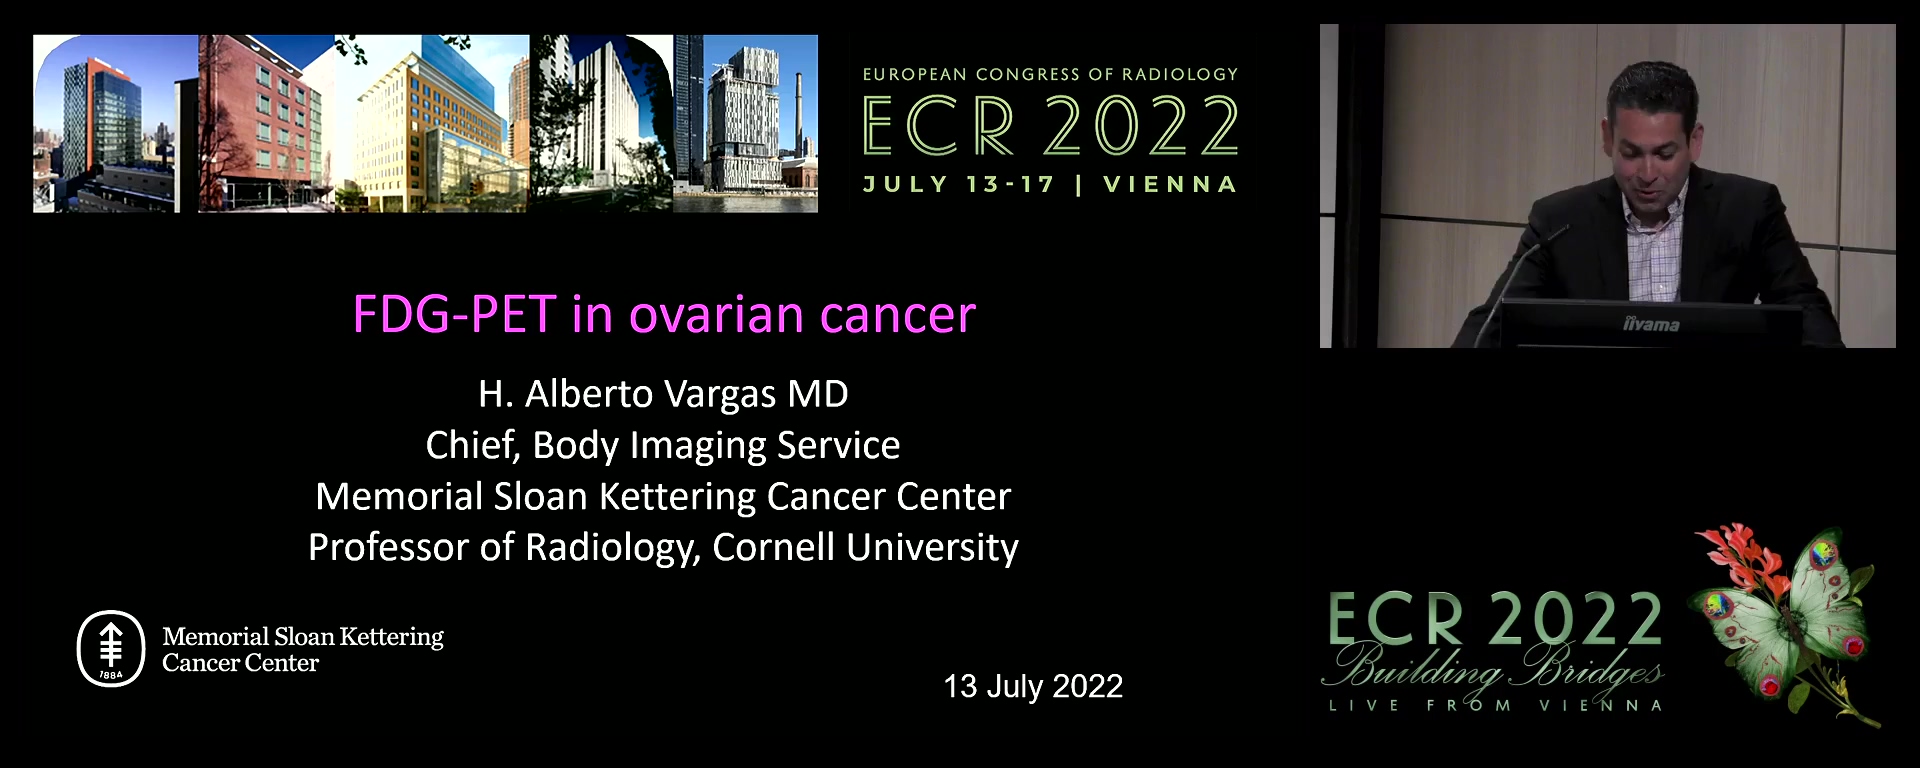 FDG-PET in ovarian cancer